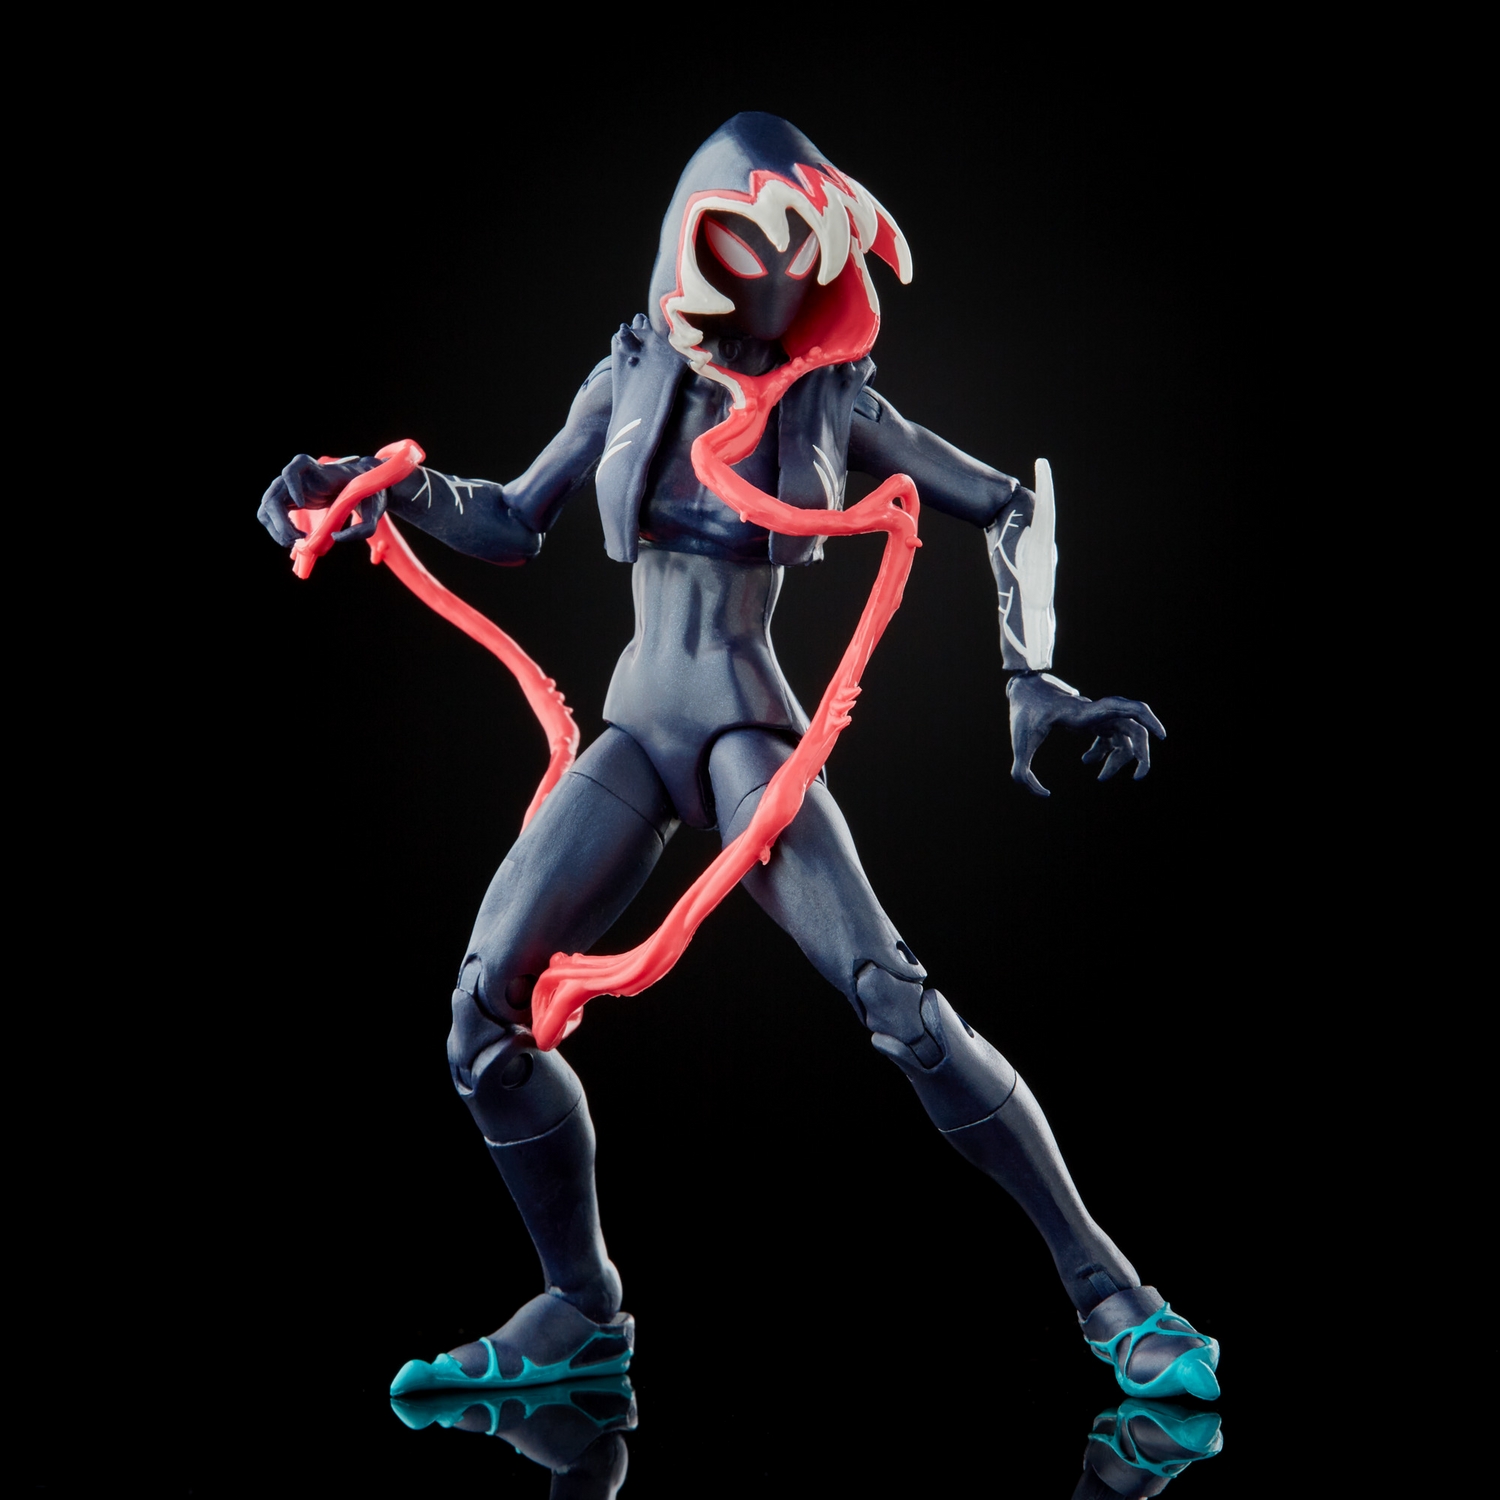 MARVEL LEGENDS SERIES 6-INCH VENOM Figure Assortment - Ghost Spider (2).jpg